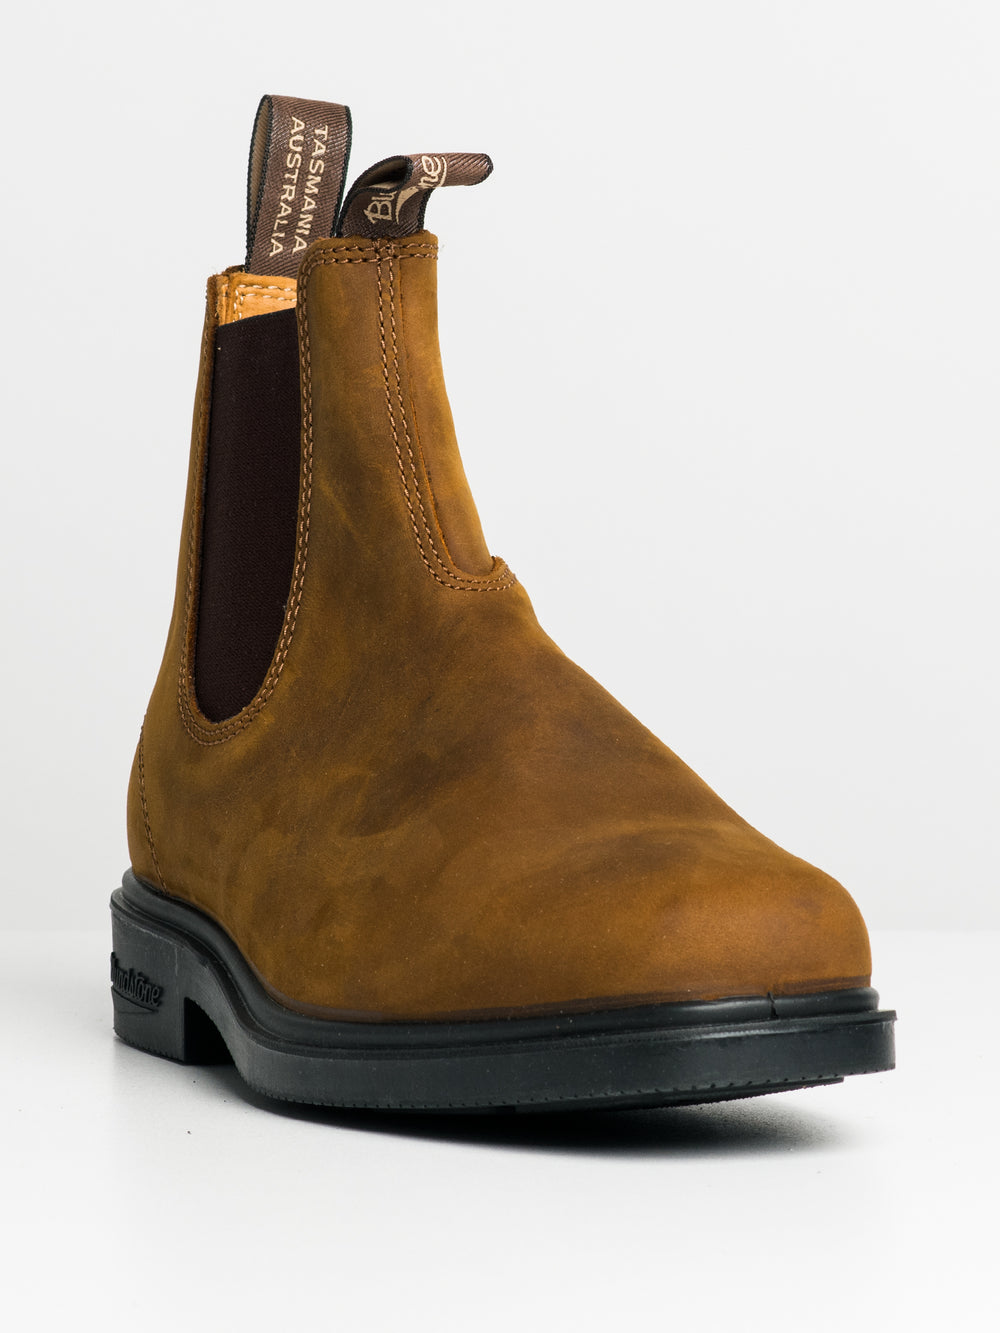 blundstone dress boots